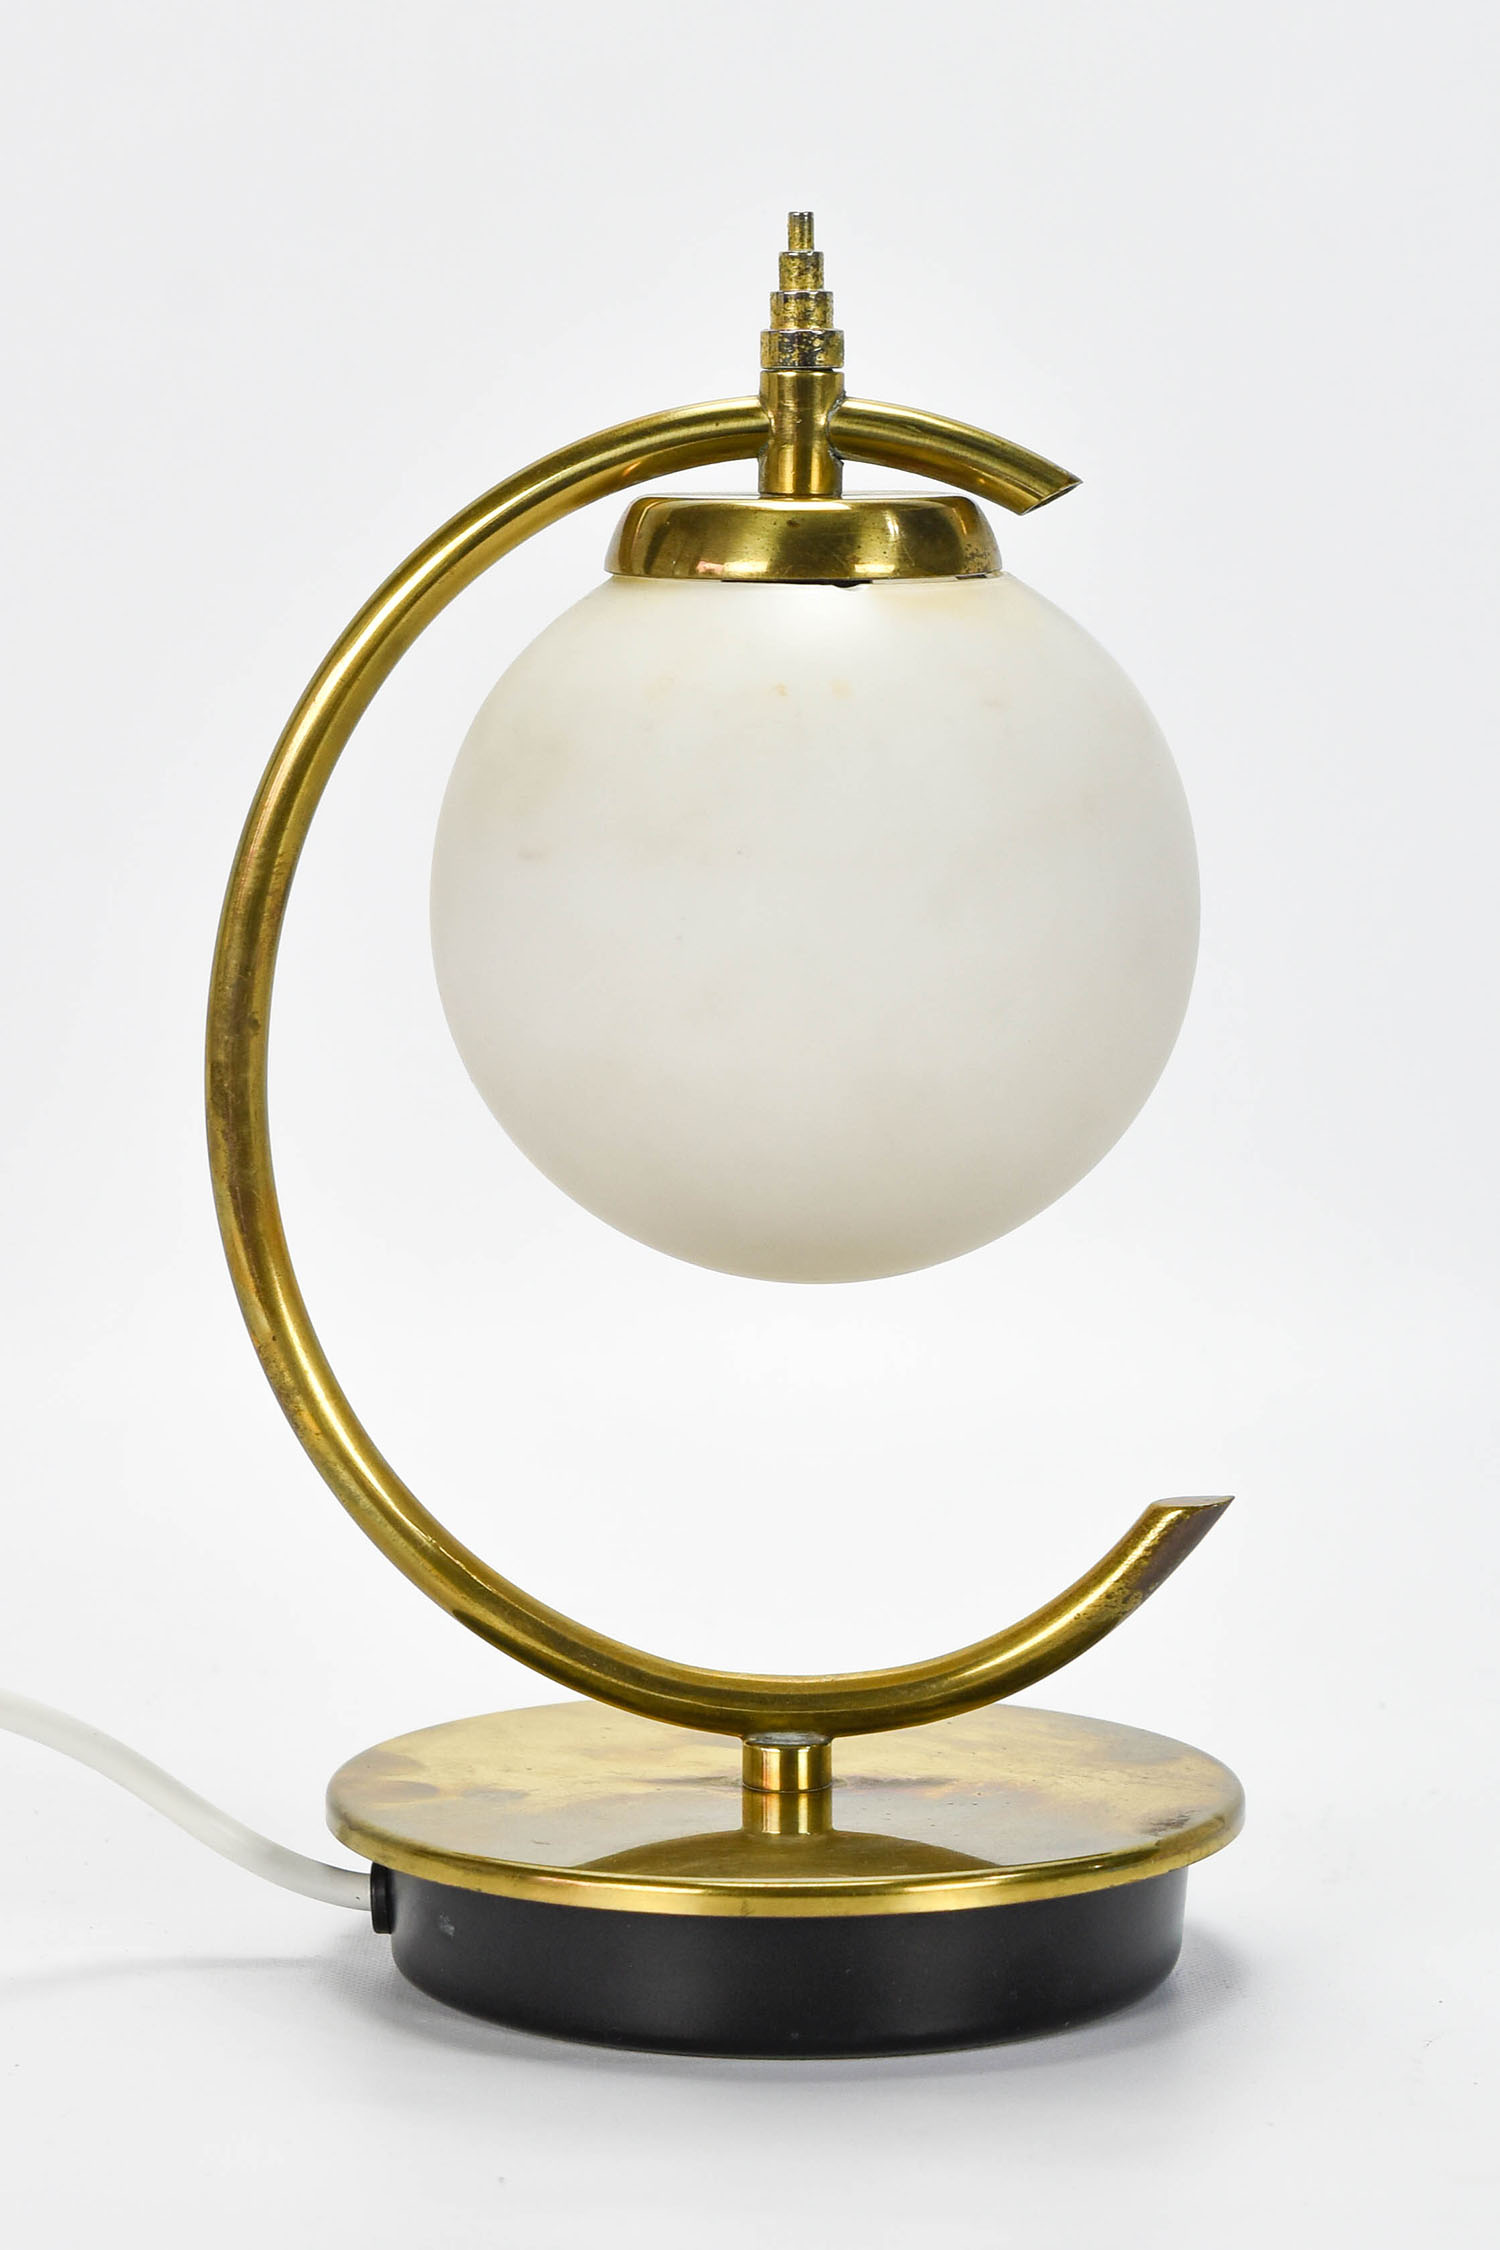 Classic Machine Age Bauhaus Brass & Glass Table Lamp